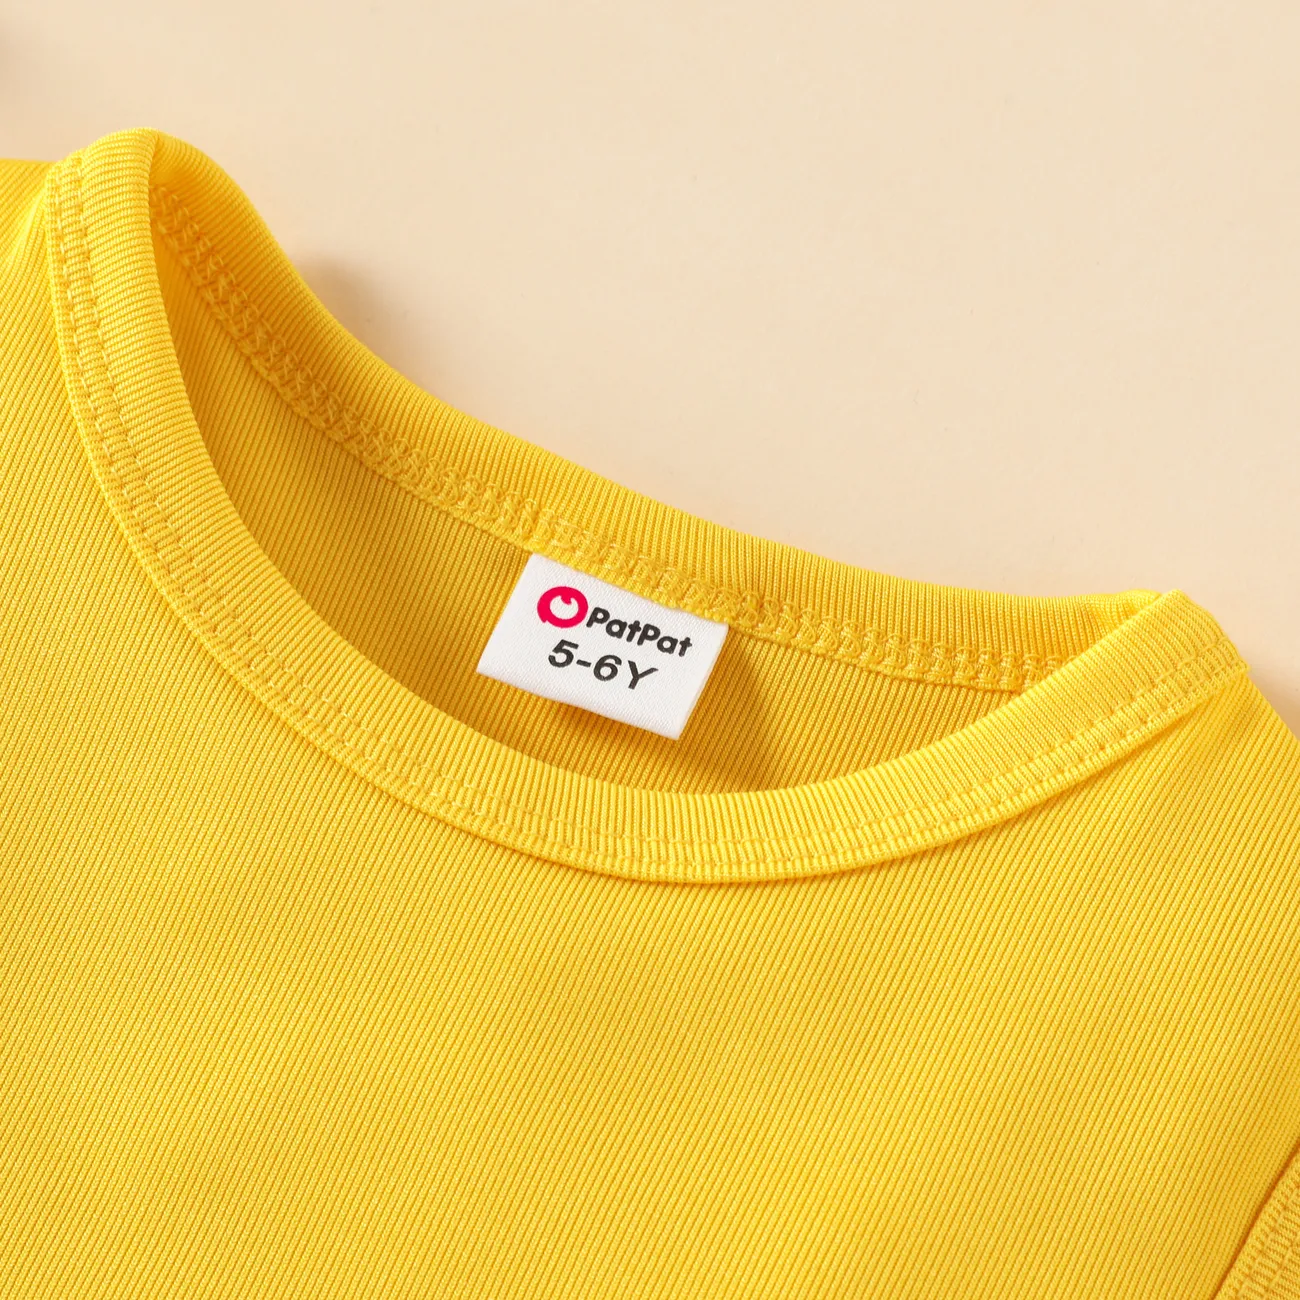 Girl's Basic Sleeveless Drawstring Tight T-Shirt in Polyester-Spandex Blend Yellow big image 1